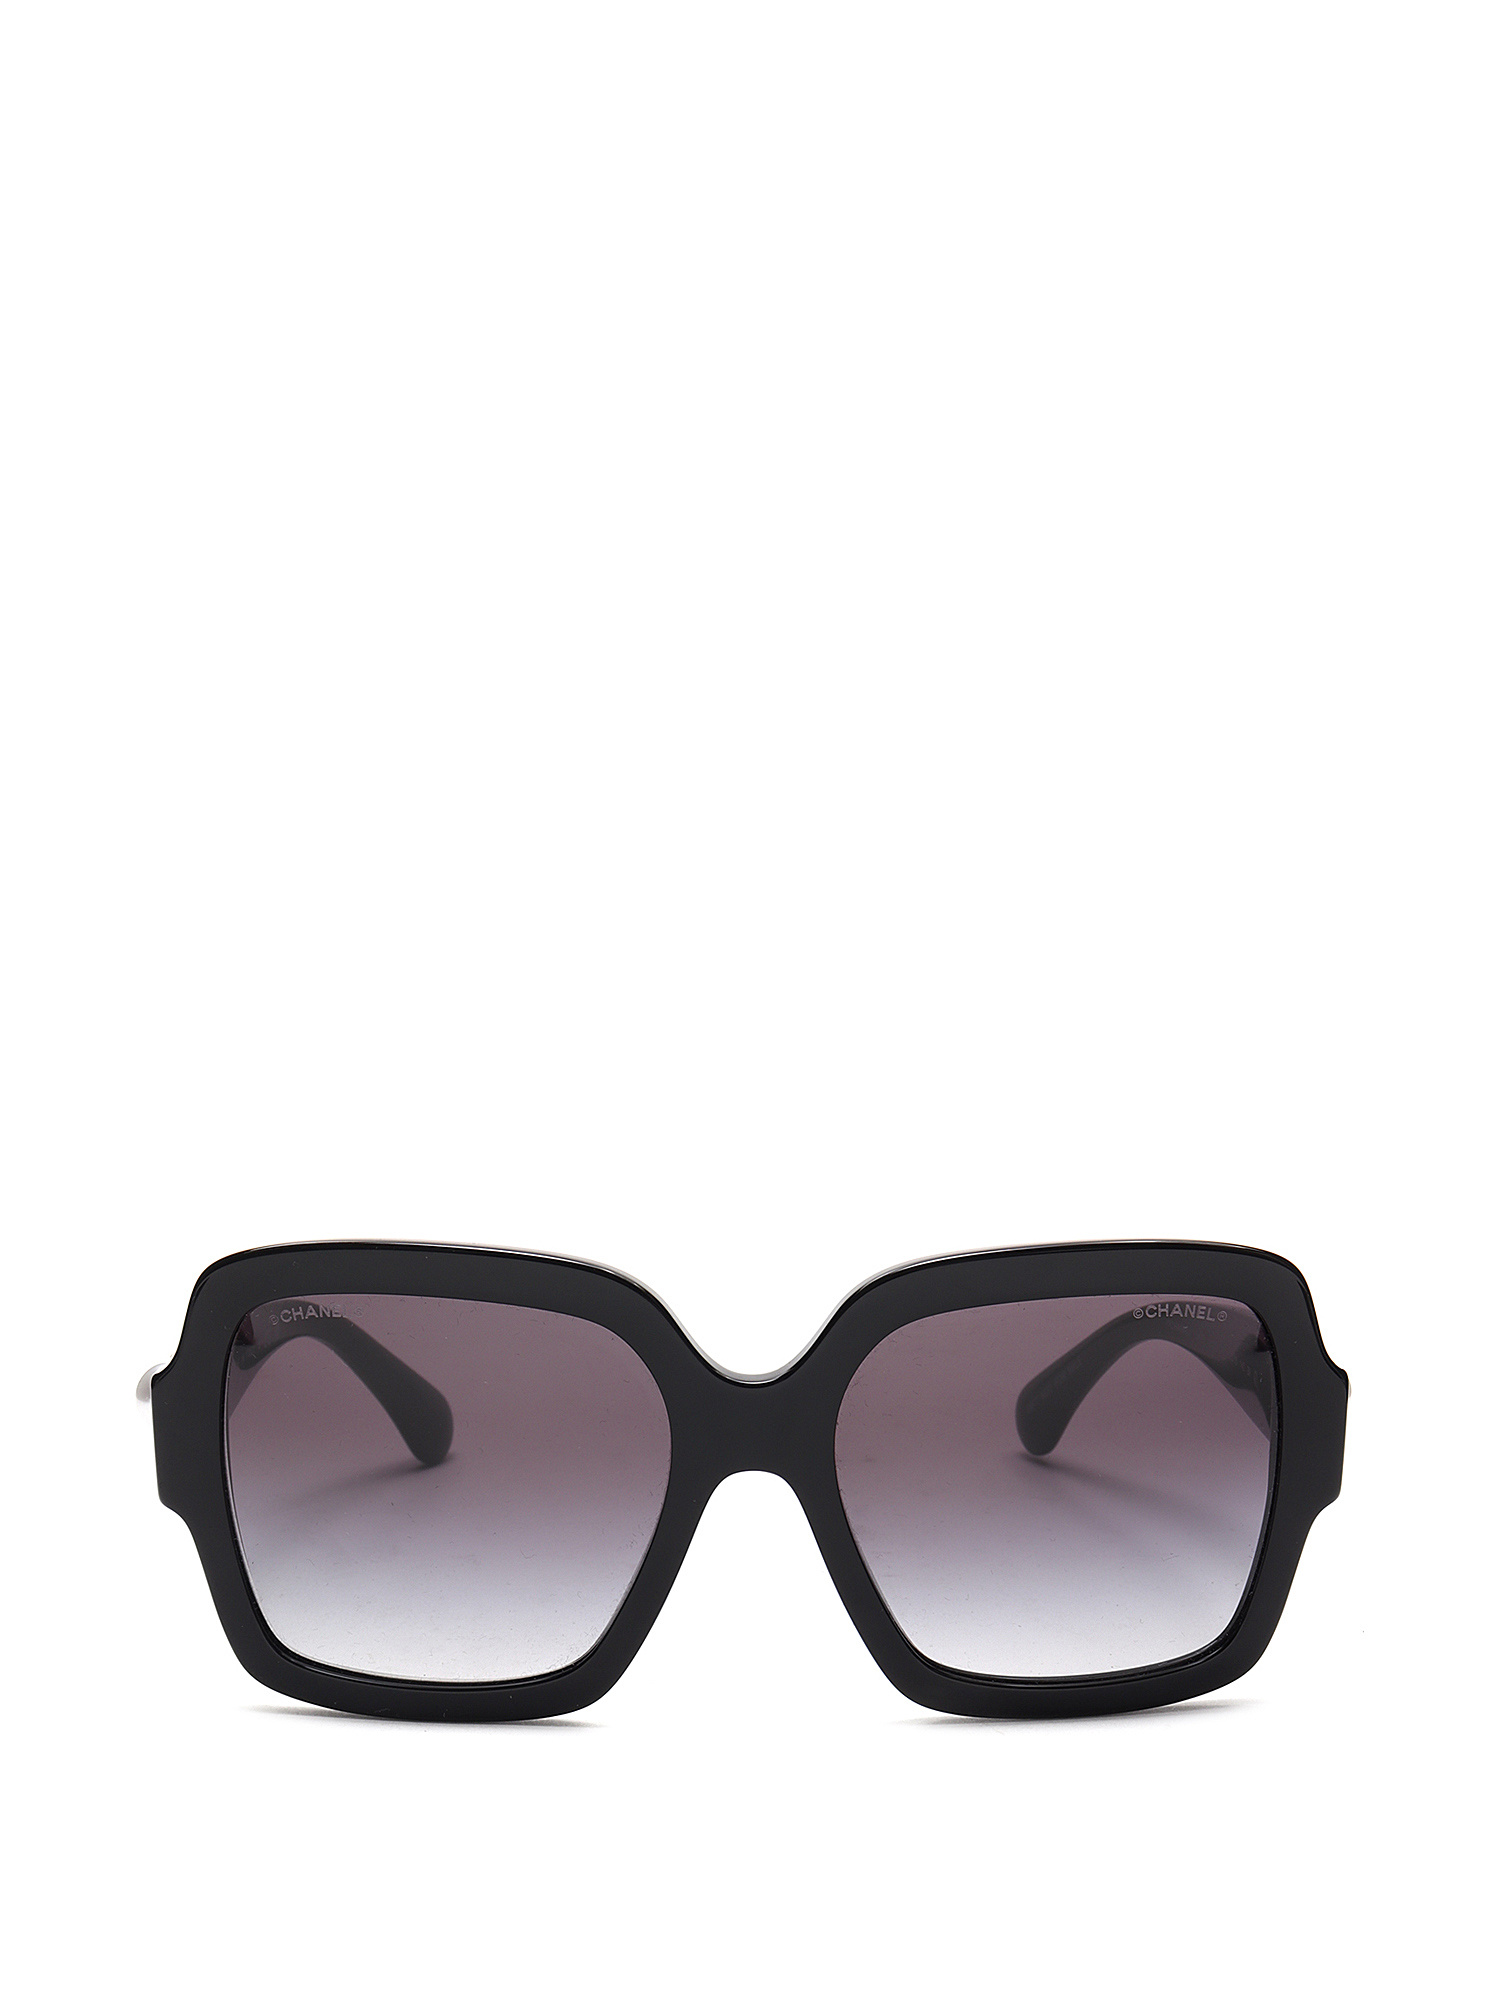 Chanel Logo And Pearl Square Sunglasses in Black